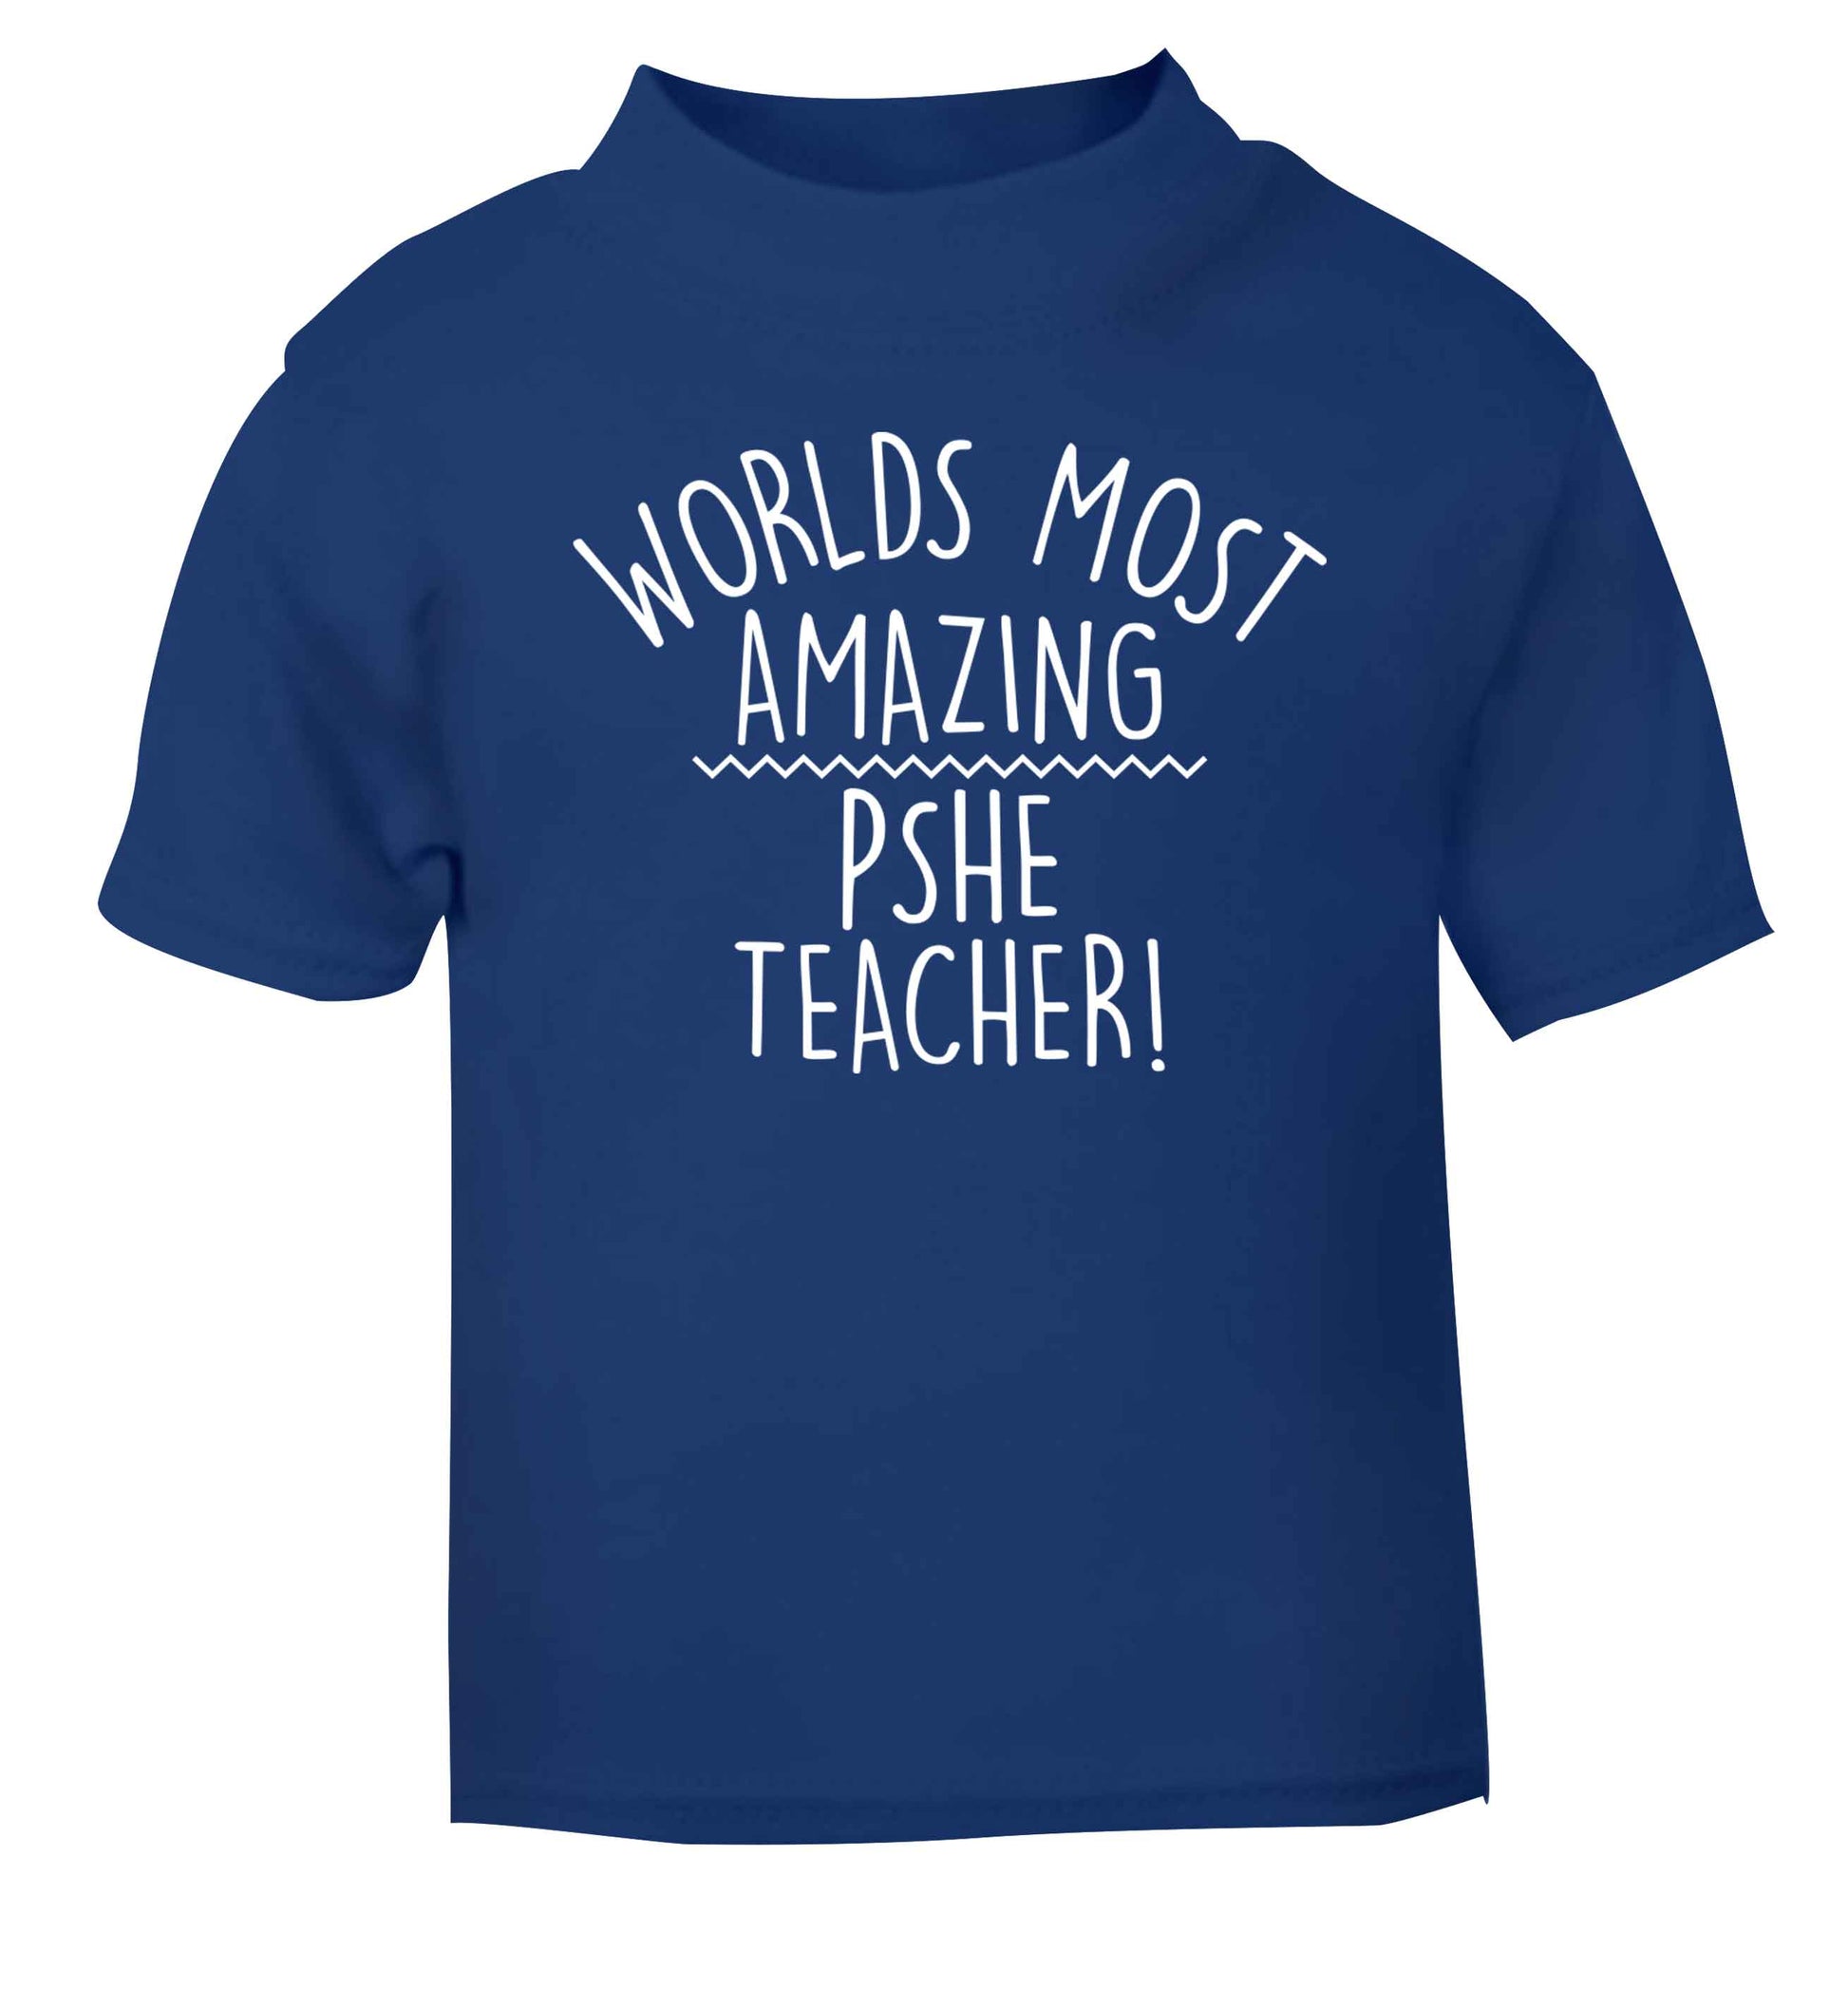 Worlds most amazing PHSE teacher blue baby toddler Tshirt 2 Years